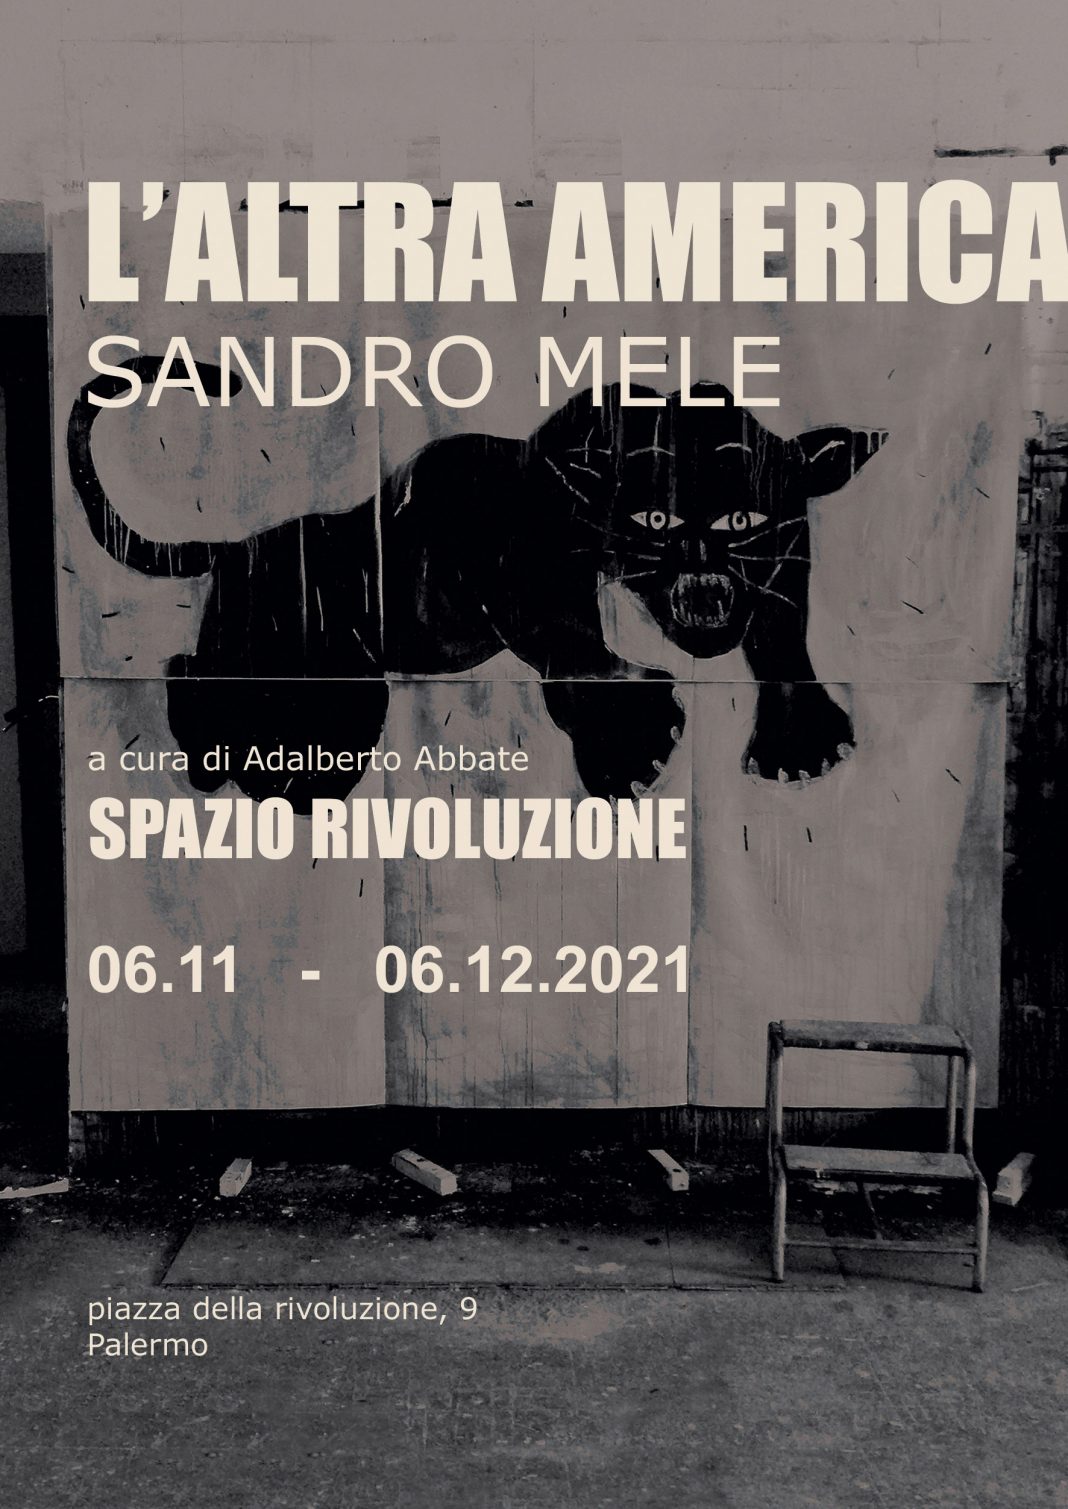 Sandro Mele – L’altra Americahttps://www.exibart.com/repository/media/formidable/11/img/c72/SANDRO-MELE-LALTRA-AMERICA-Spazio-rivoluzione-Palermo-1068x1509.jpg